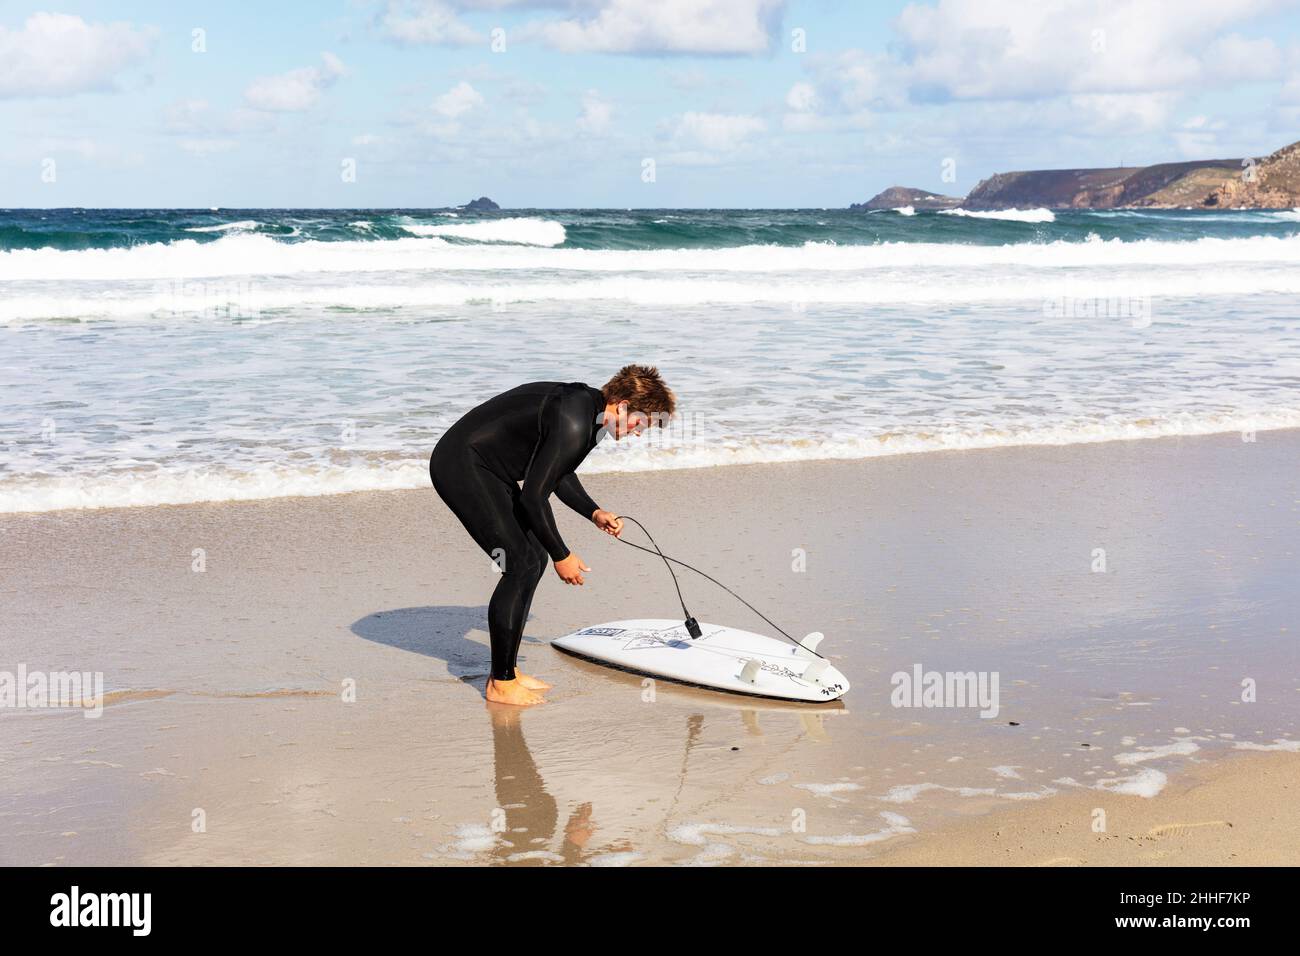 Surfista, surfista y tabla de surf, tabla de surf, playa Hayle, Cornwall, Reino Unido, Inglaterra, Cornwall surfer, Cornwall surfboarding, surfboarder, surf boarder, mar Foto de stock